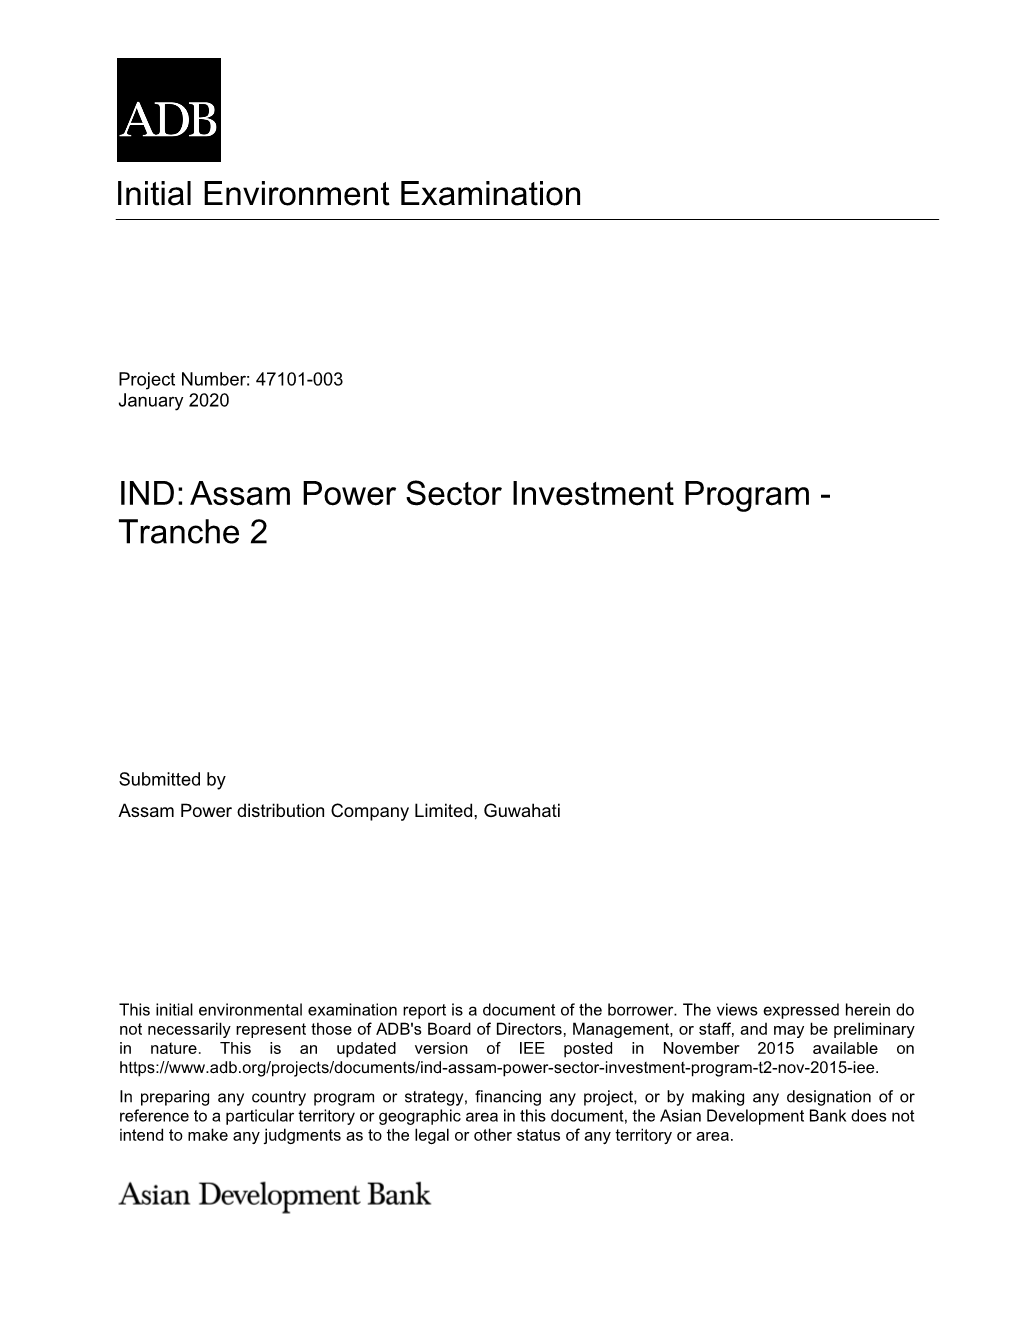 IND:Assam Power Sector Investment Program